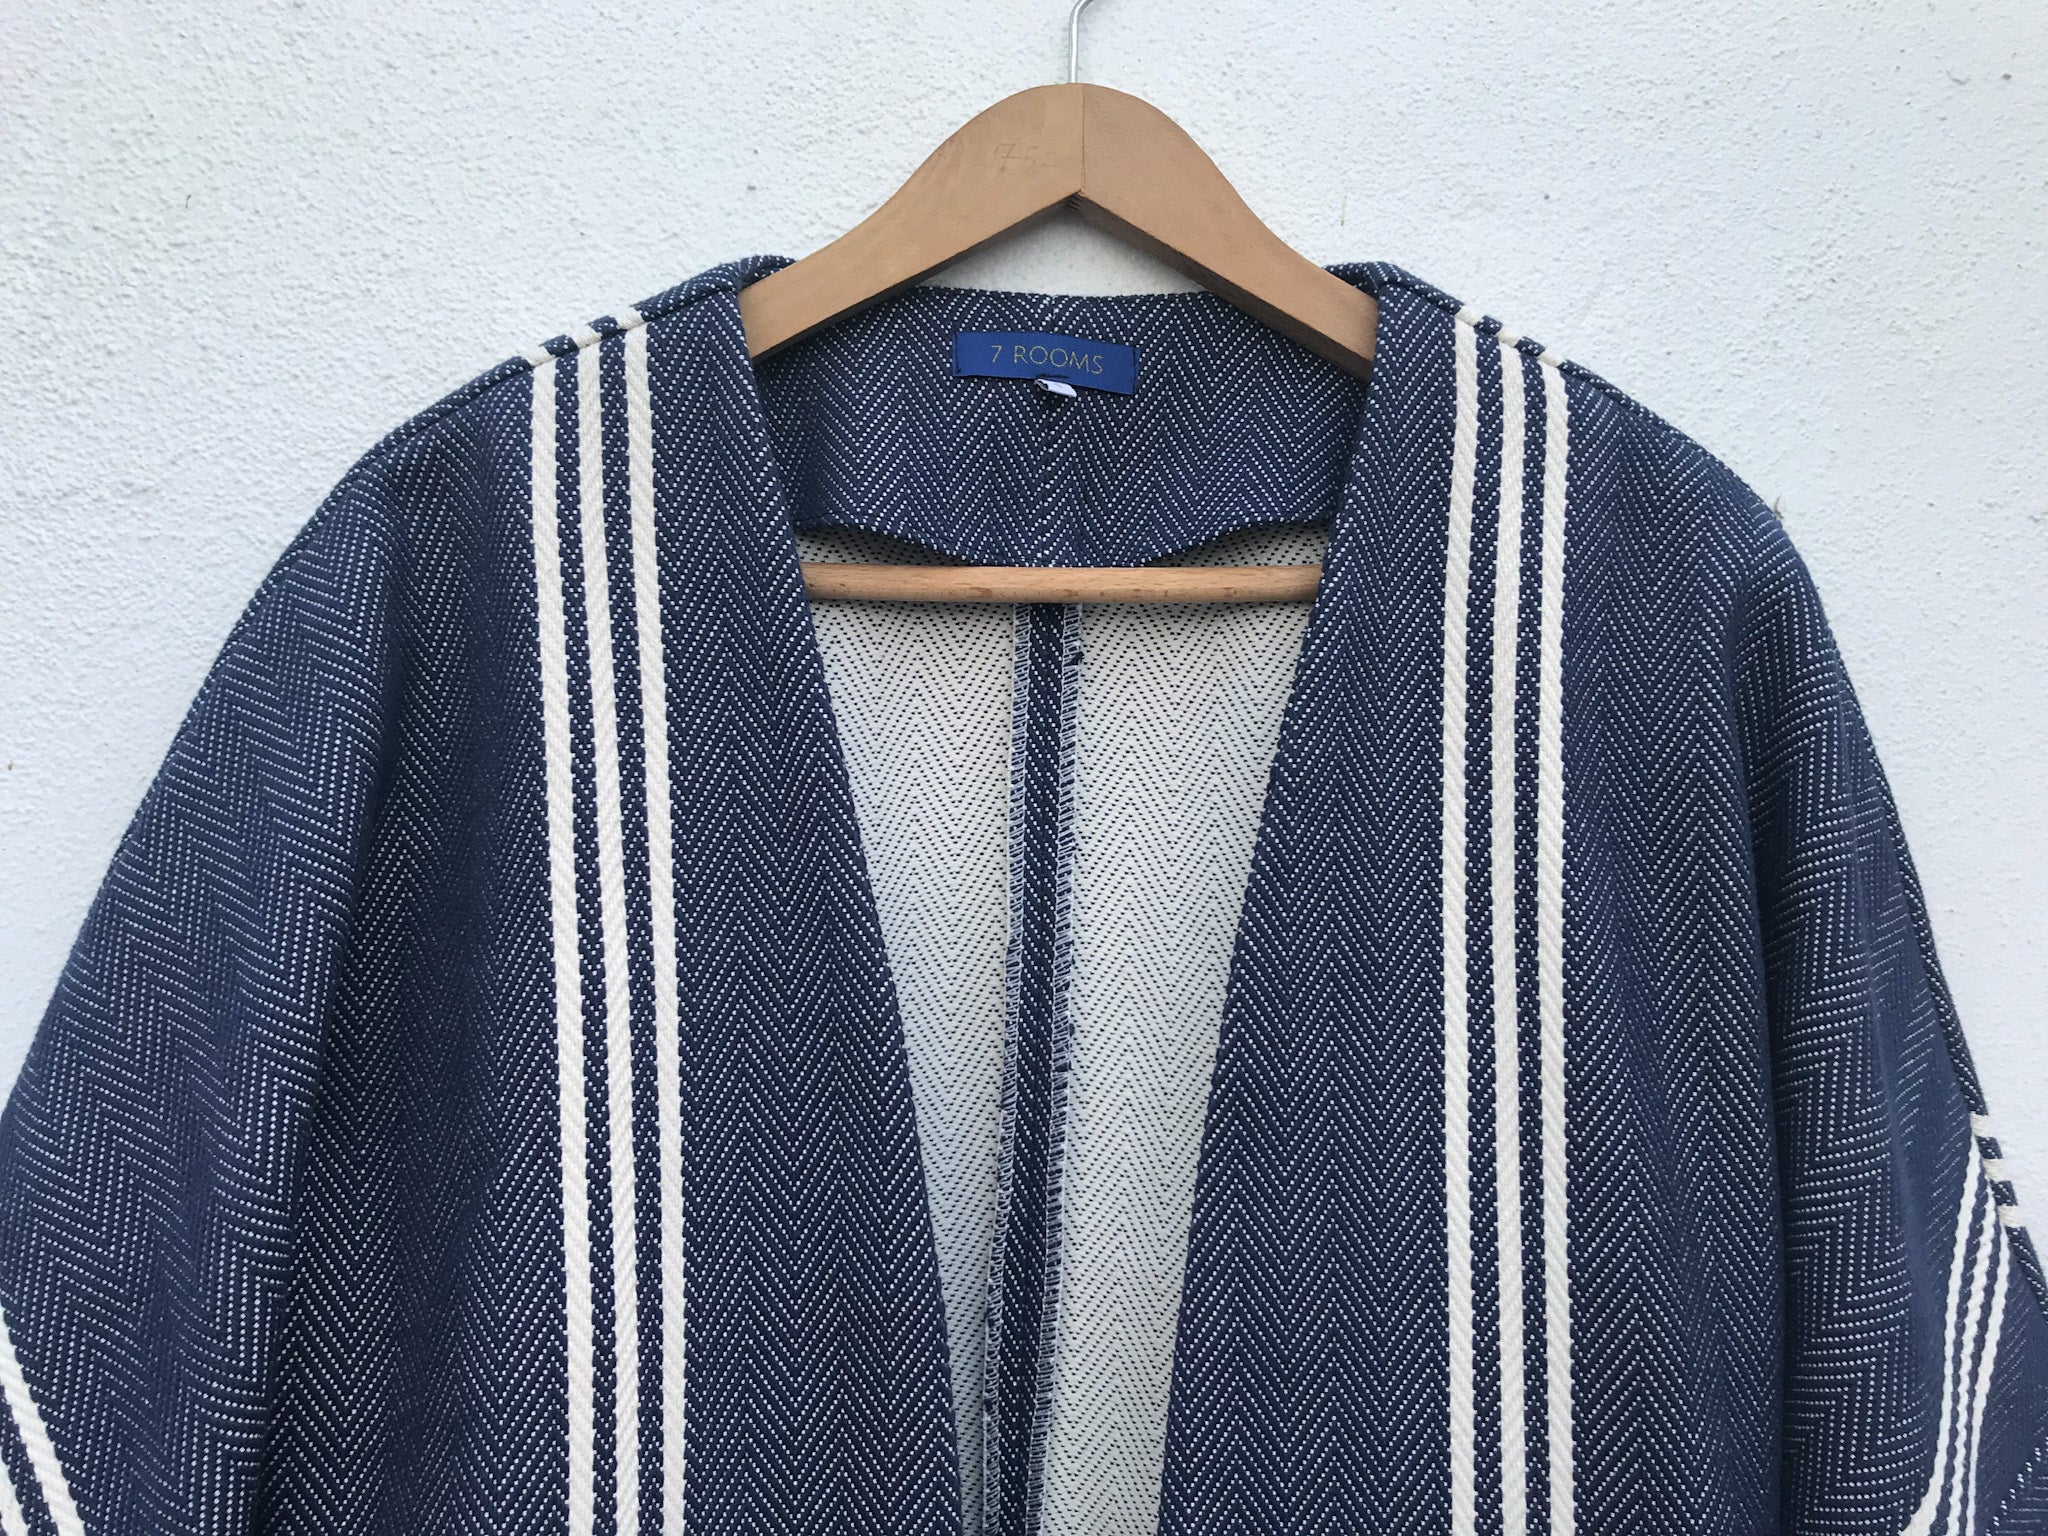 Kimono Tradition blue